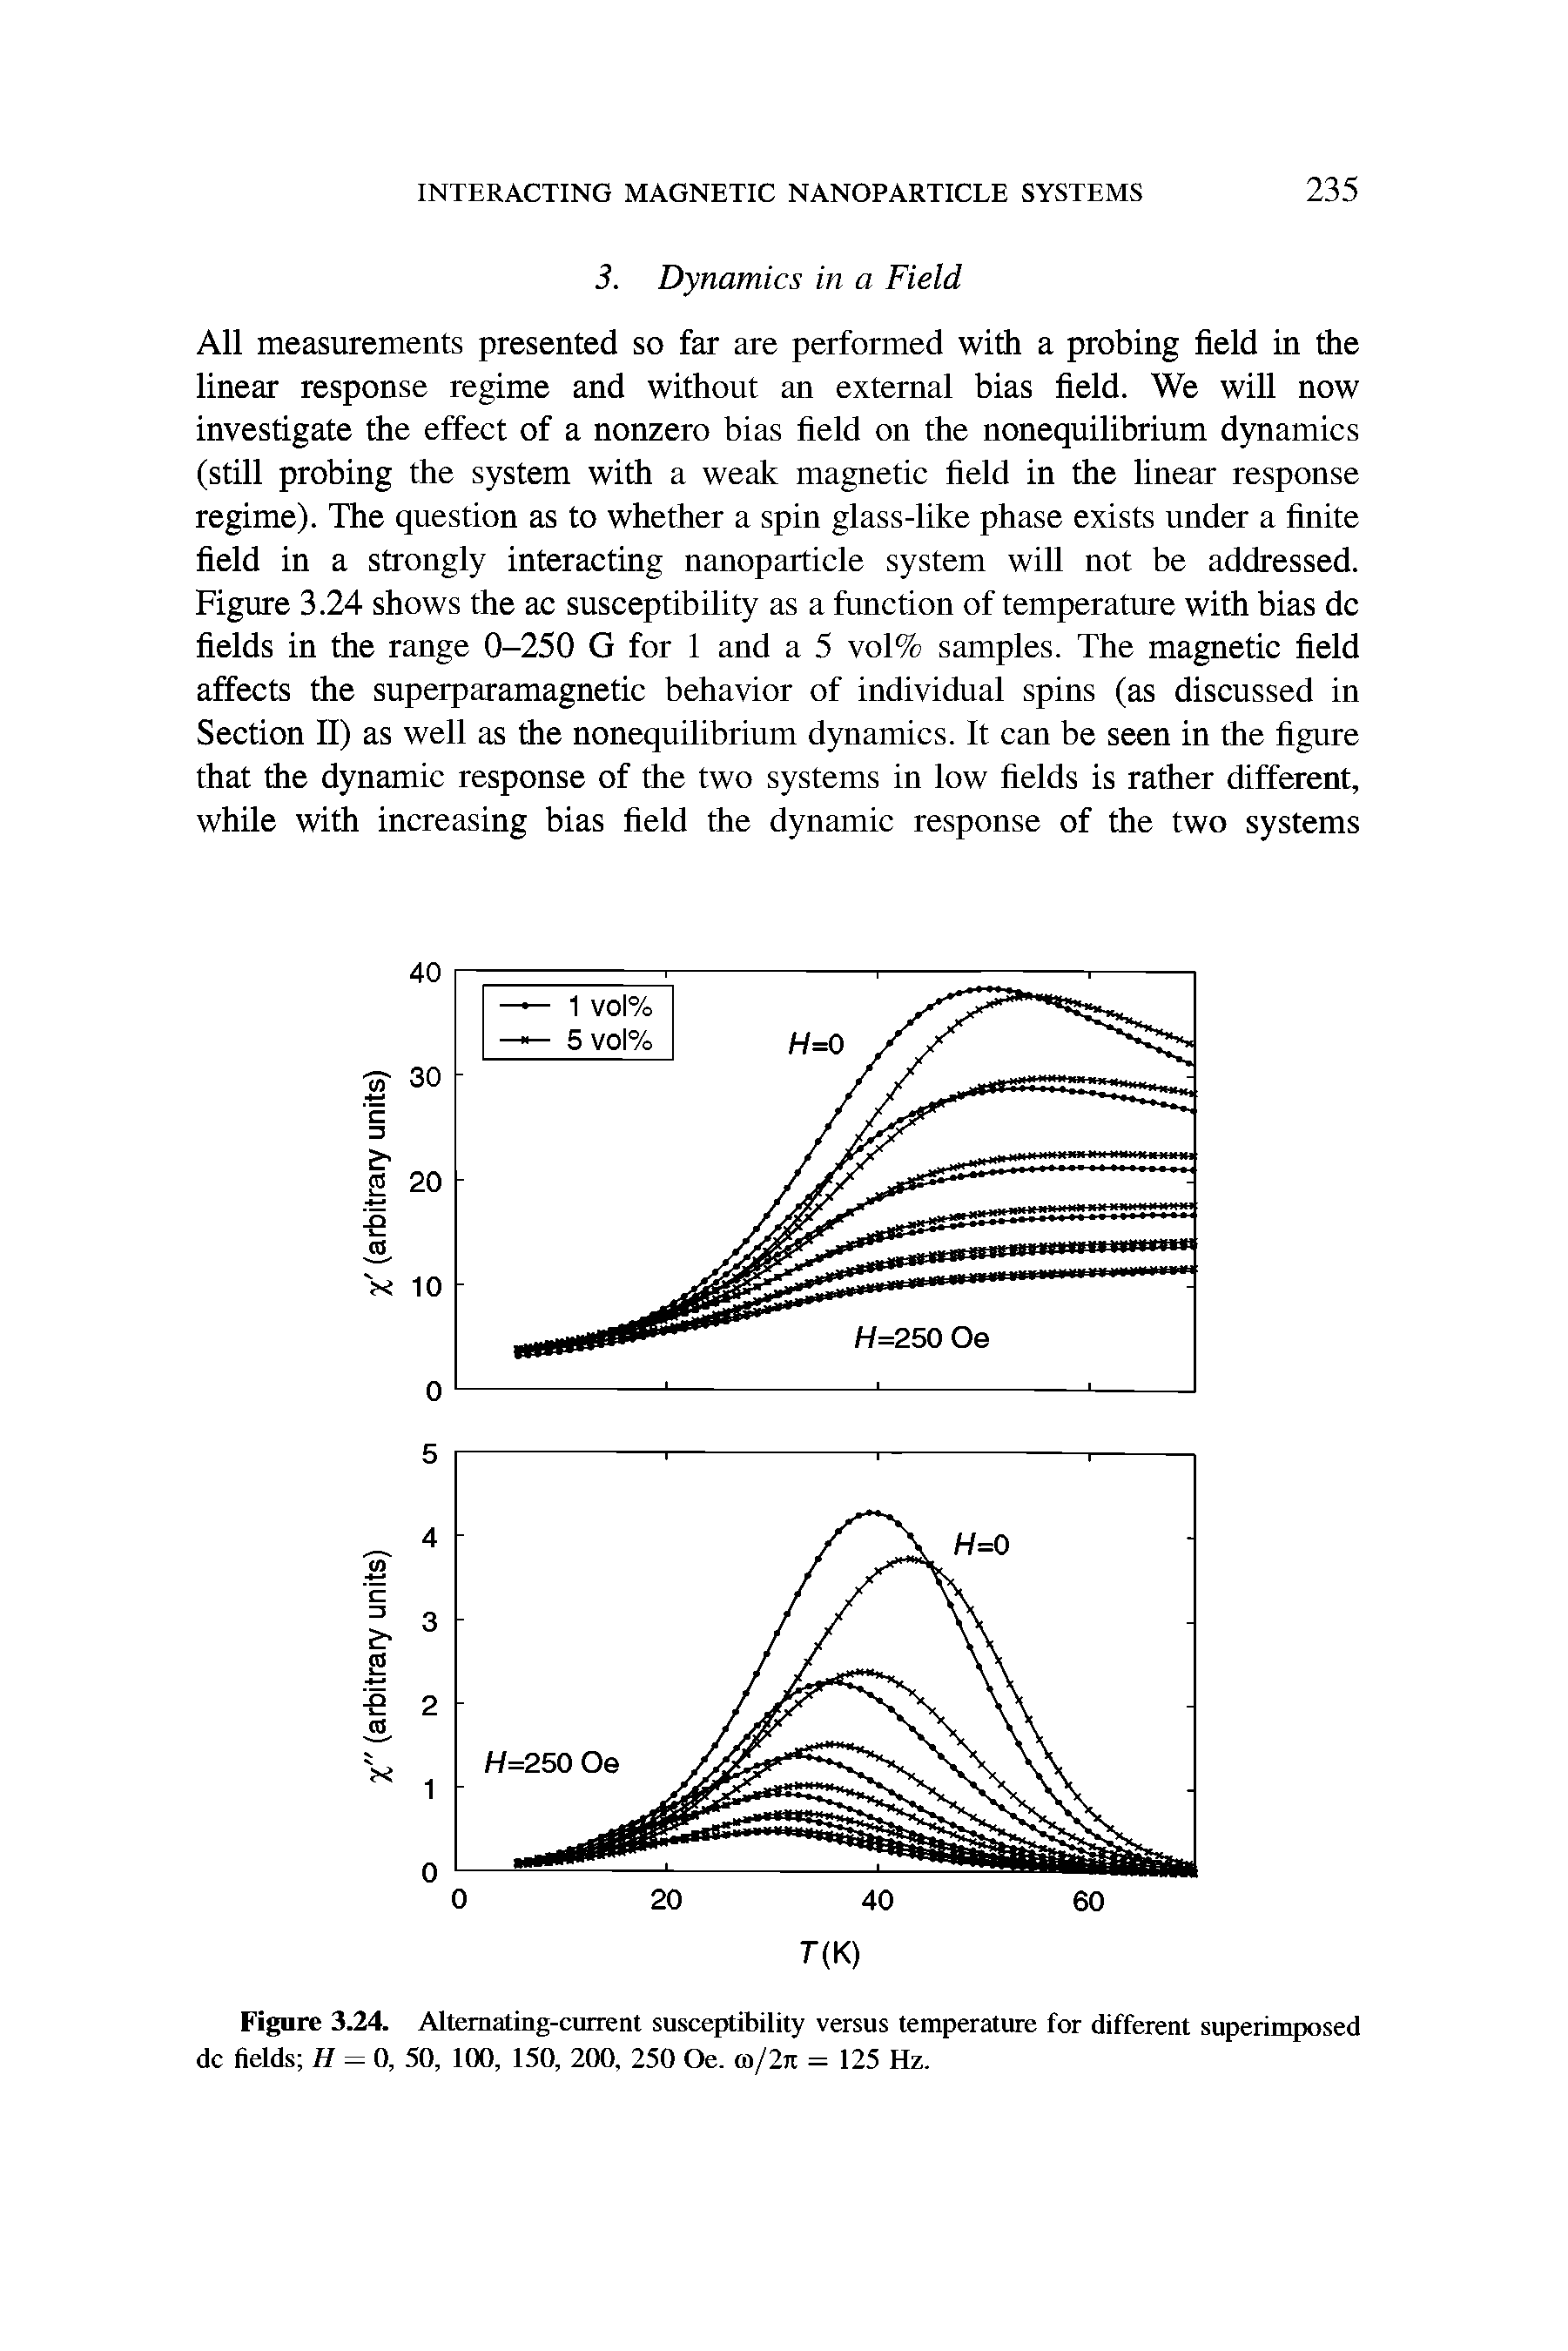 Figure 3.24. Alternating-current susceptibility versus temperature for different superimposed dc fields H = 0, 50, 100, 150, 200, 250 Oe. mjln = 125 Hz.